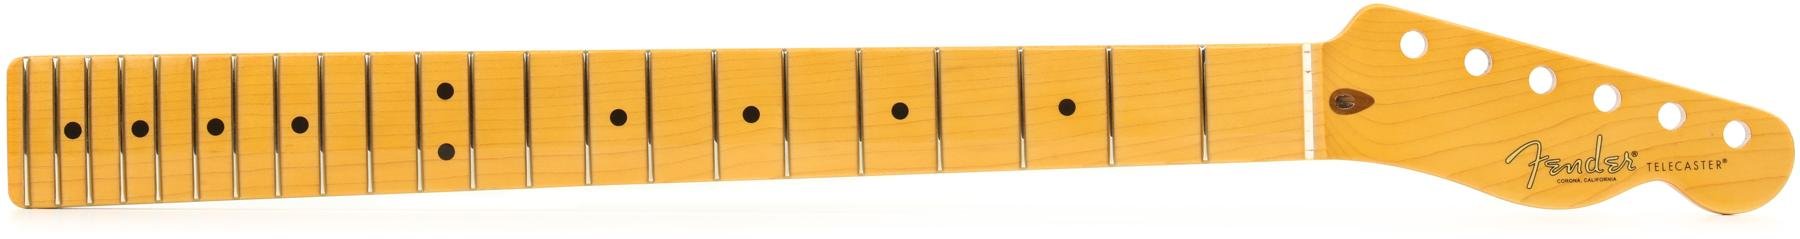 Fender American Professional II Telecaster Neck - Maple 